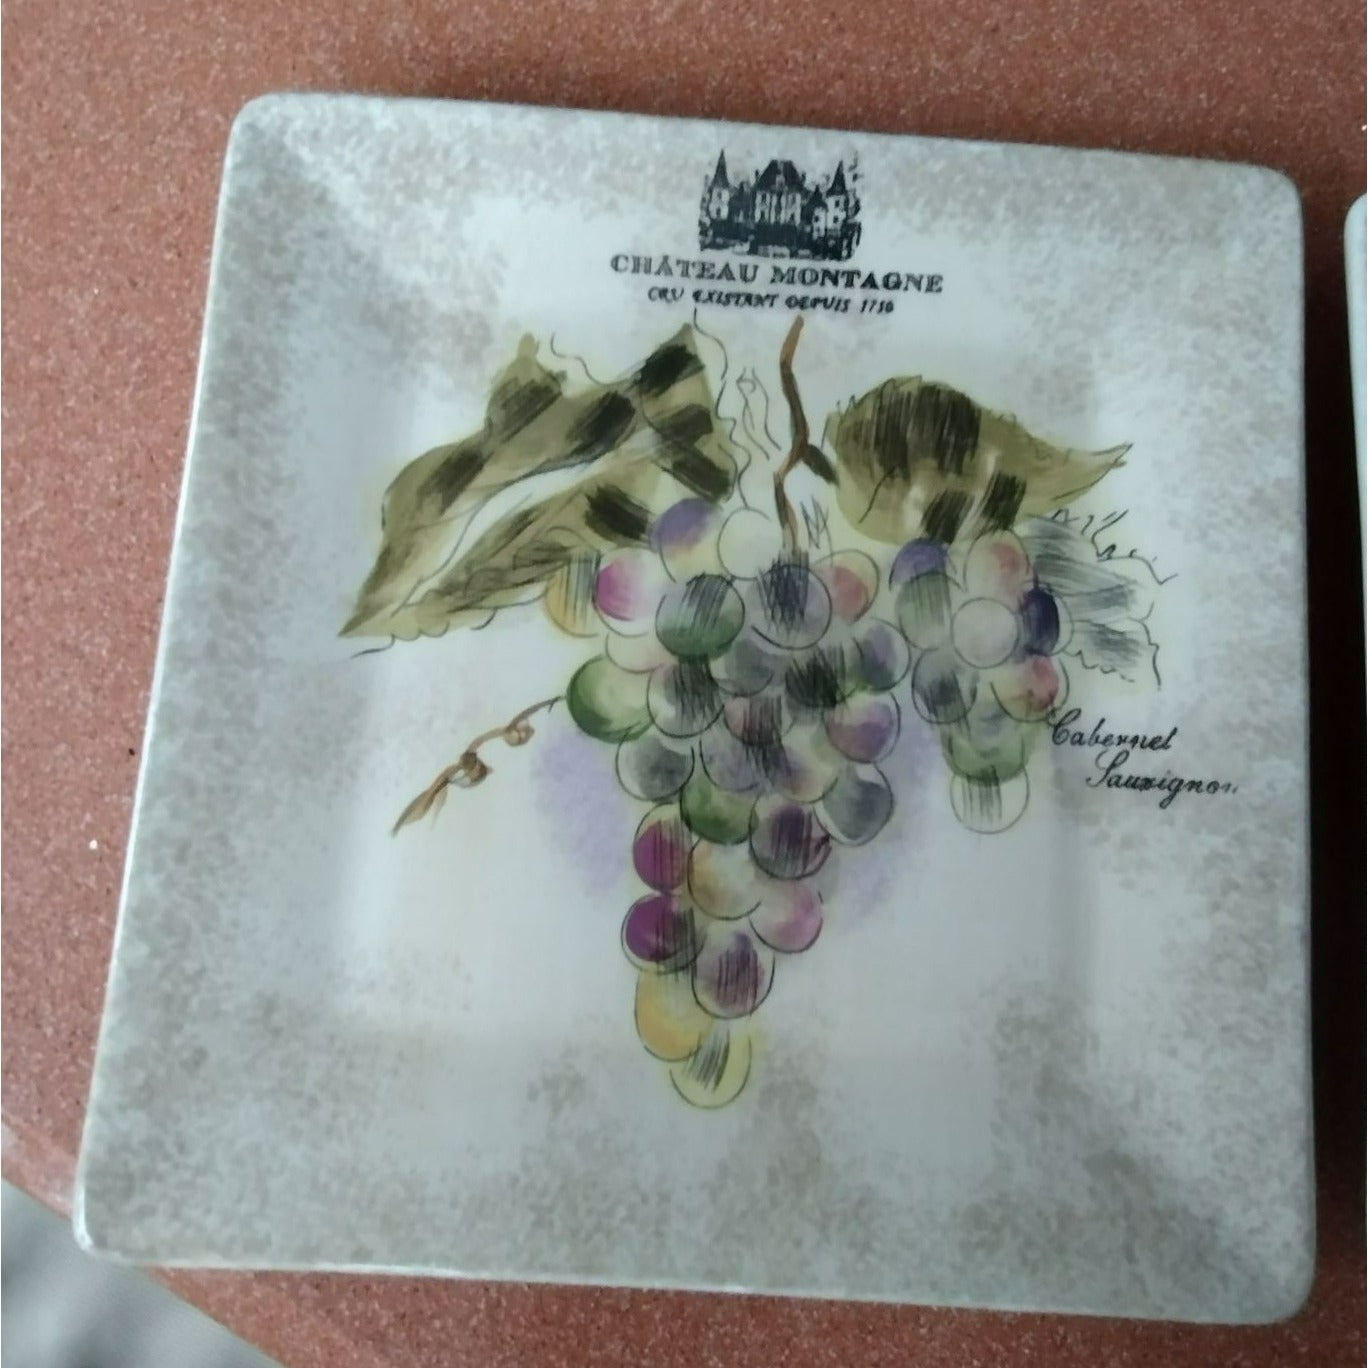 222 Fifth Vinter's Journal Salad Plates, Set of 2, 8" Square Ceramic Wine Grapes